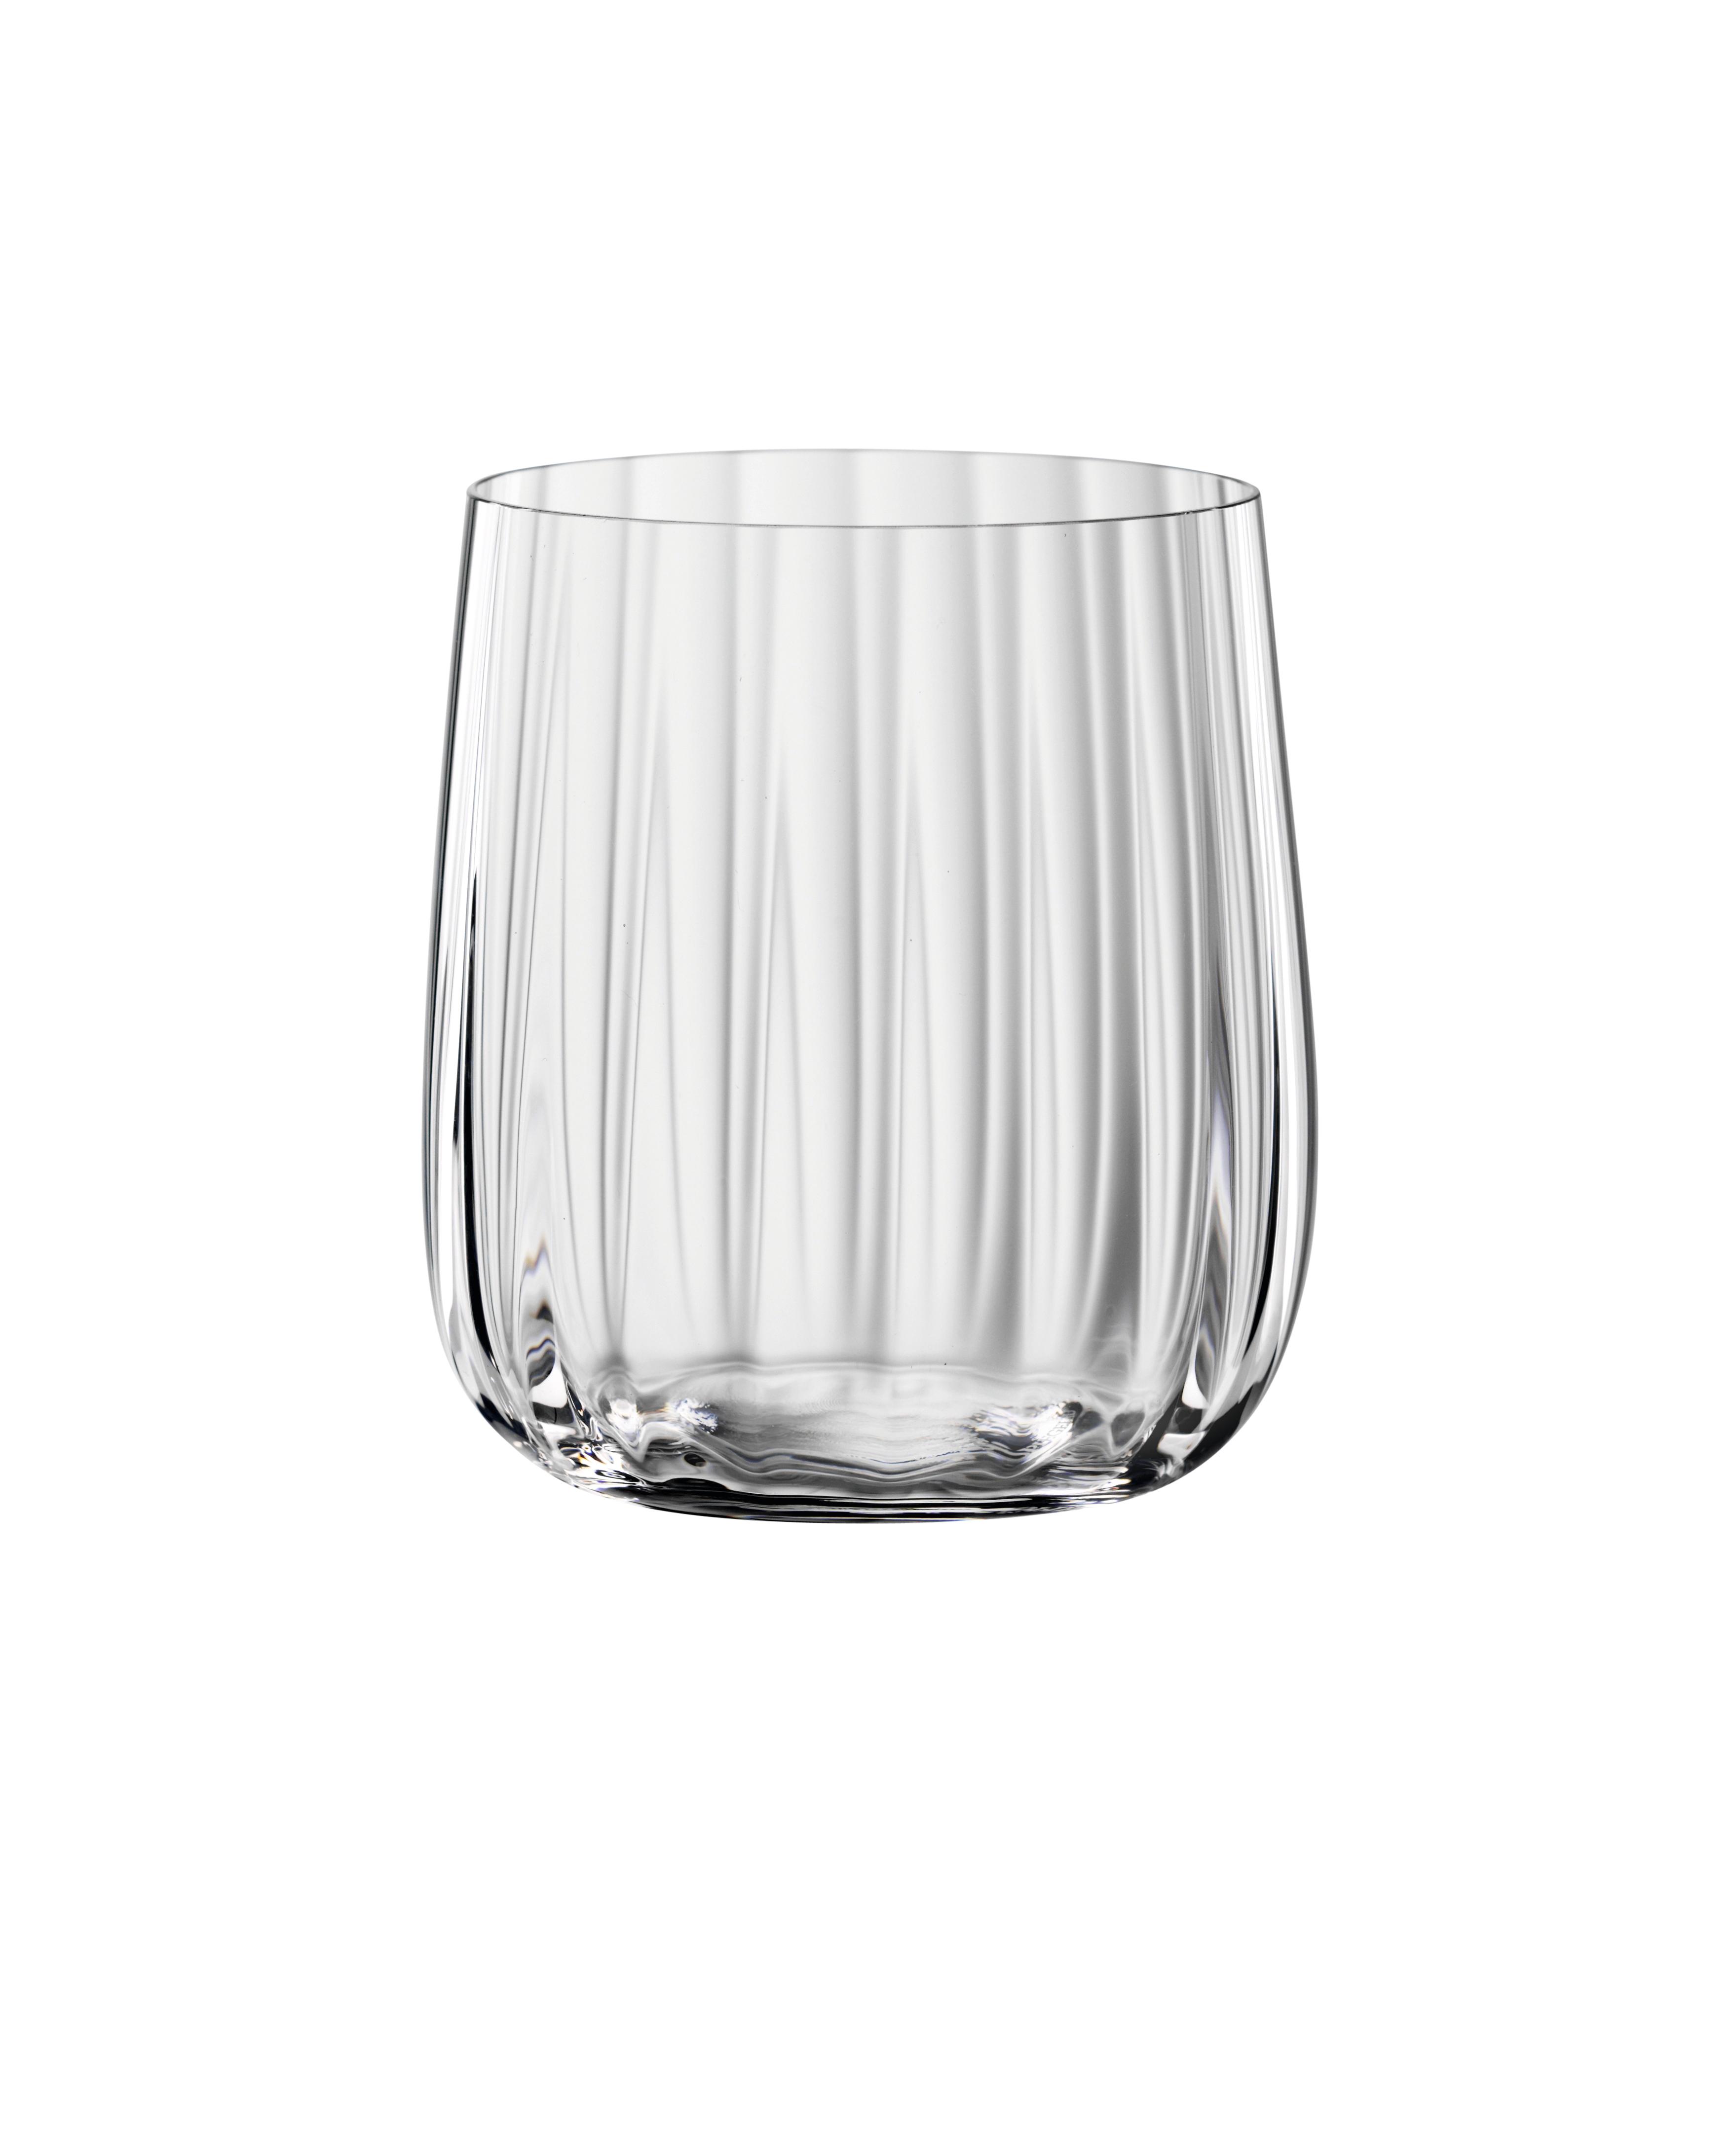 Gläserset Lifestyle, 4-teilig - Klar, MODERN, Glas (8,3/9,0/8,3cm) - Spiegelau